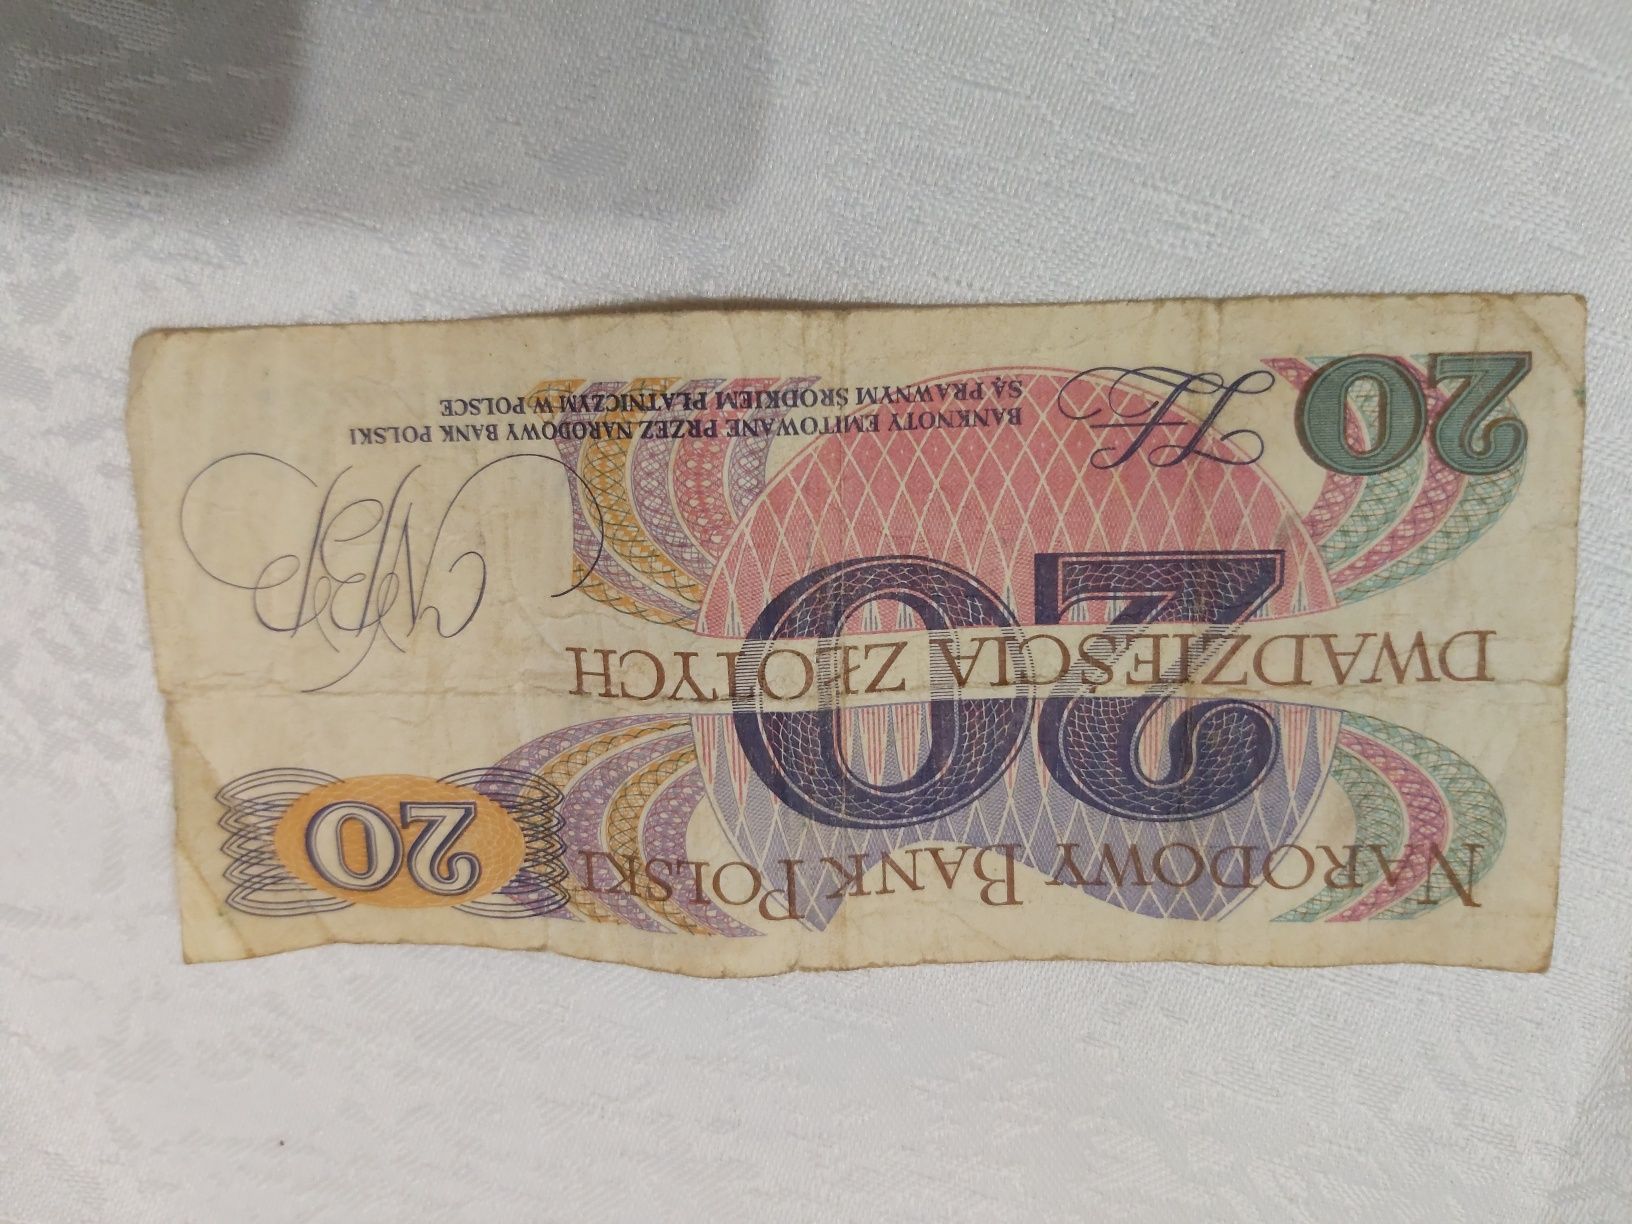 Banknot 20zl z 1982 roku